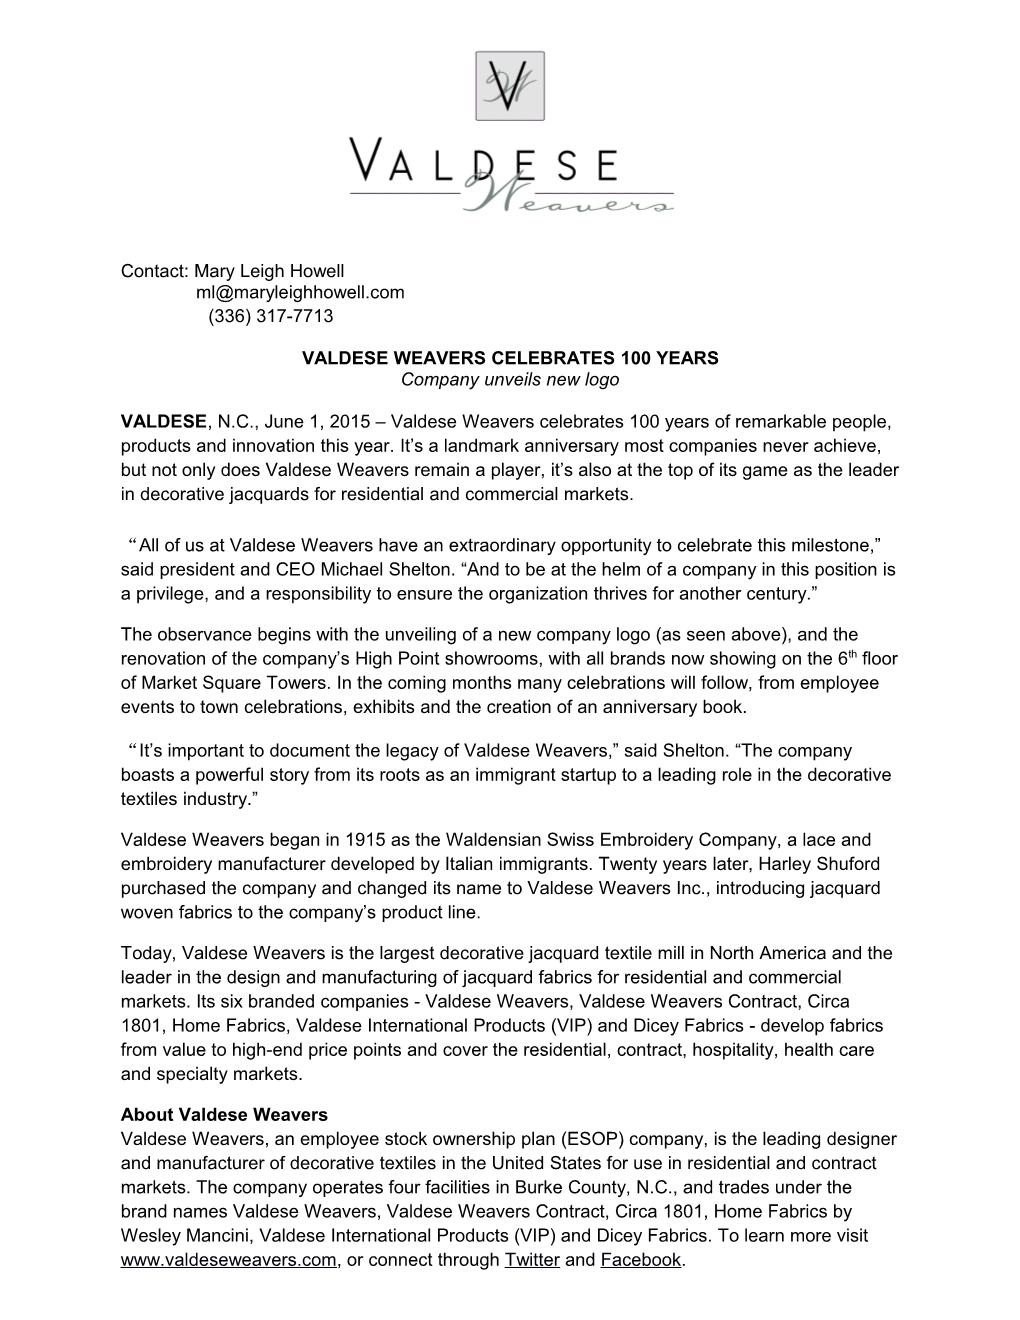 Valdese Weavers Celebrates 100 Years